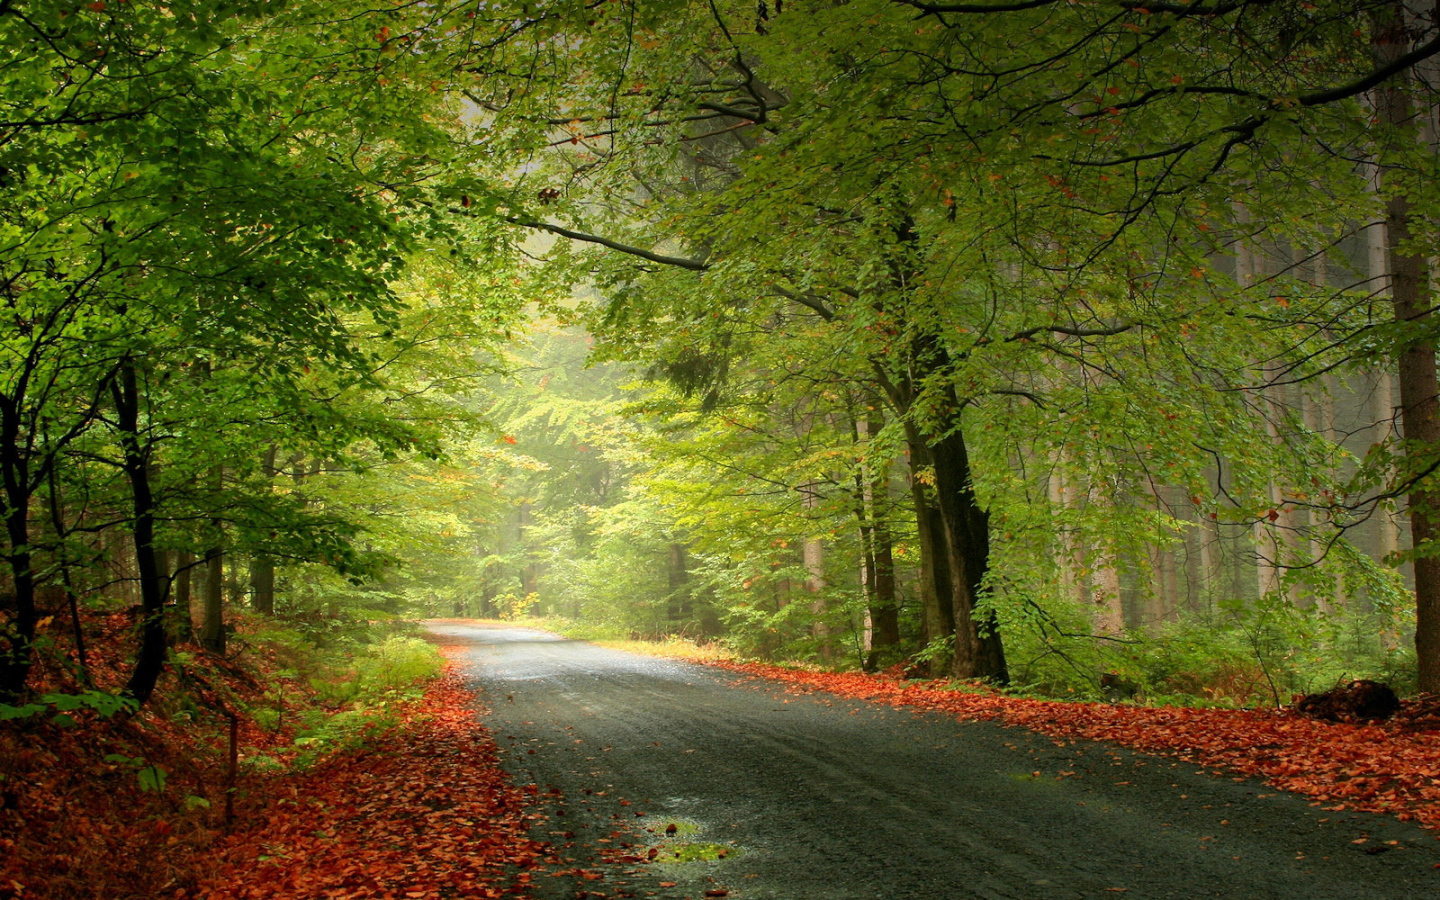 Листья на обочине дороги